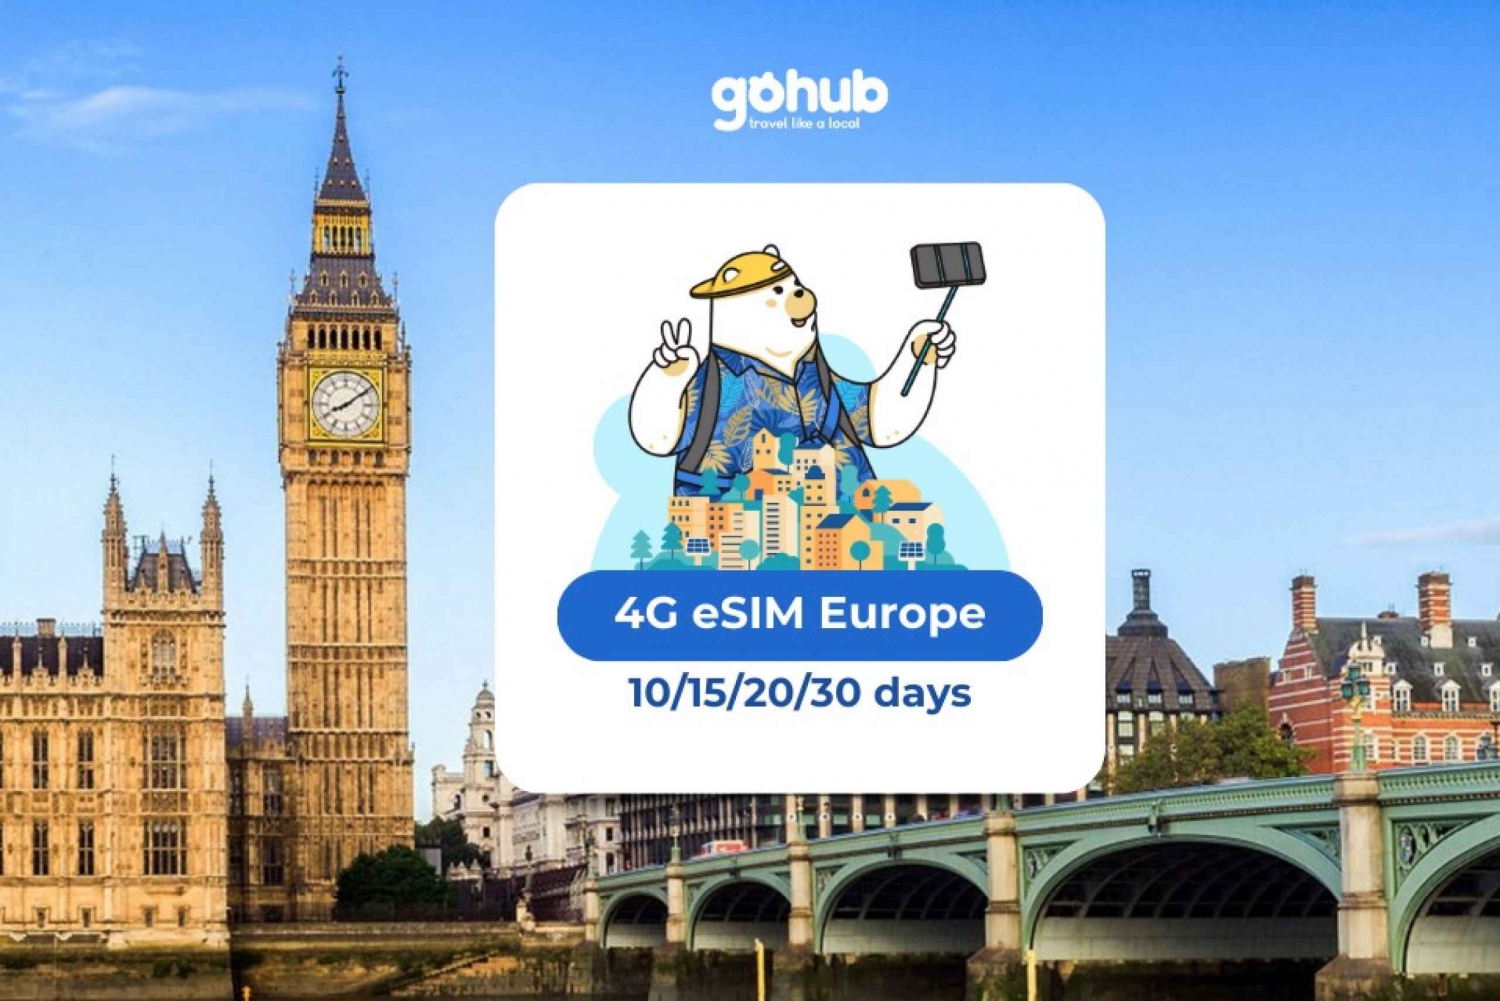 Europe: eSIM Mobile Data (33 countries) - 10/15/20/30 days